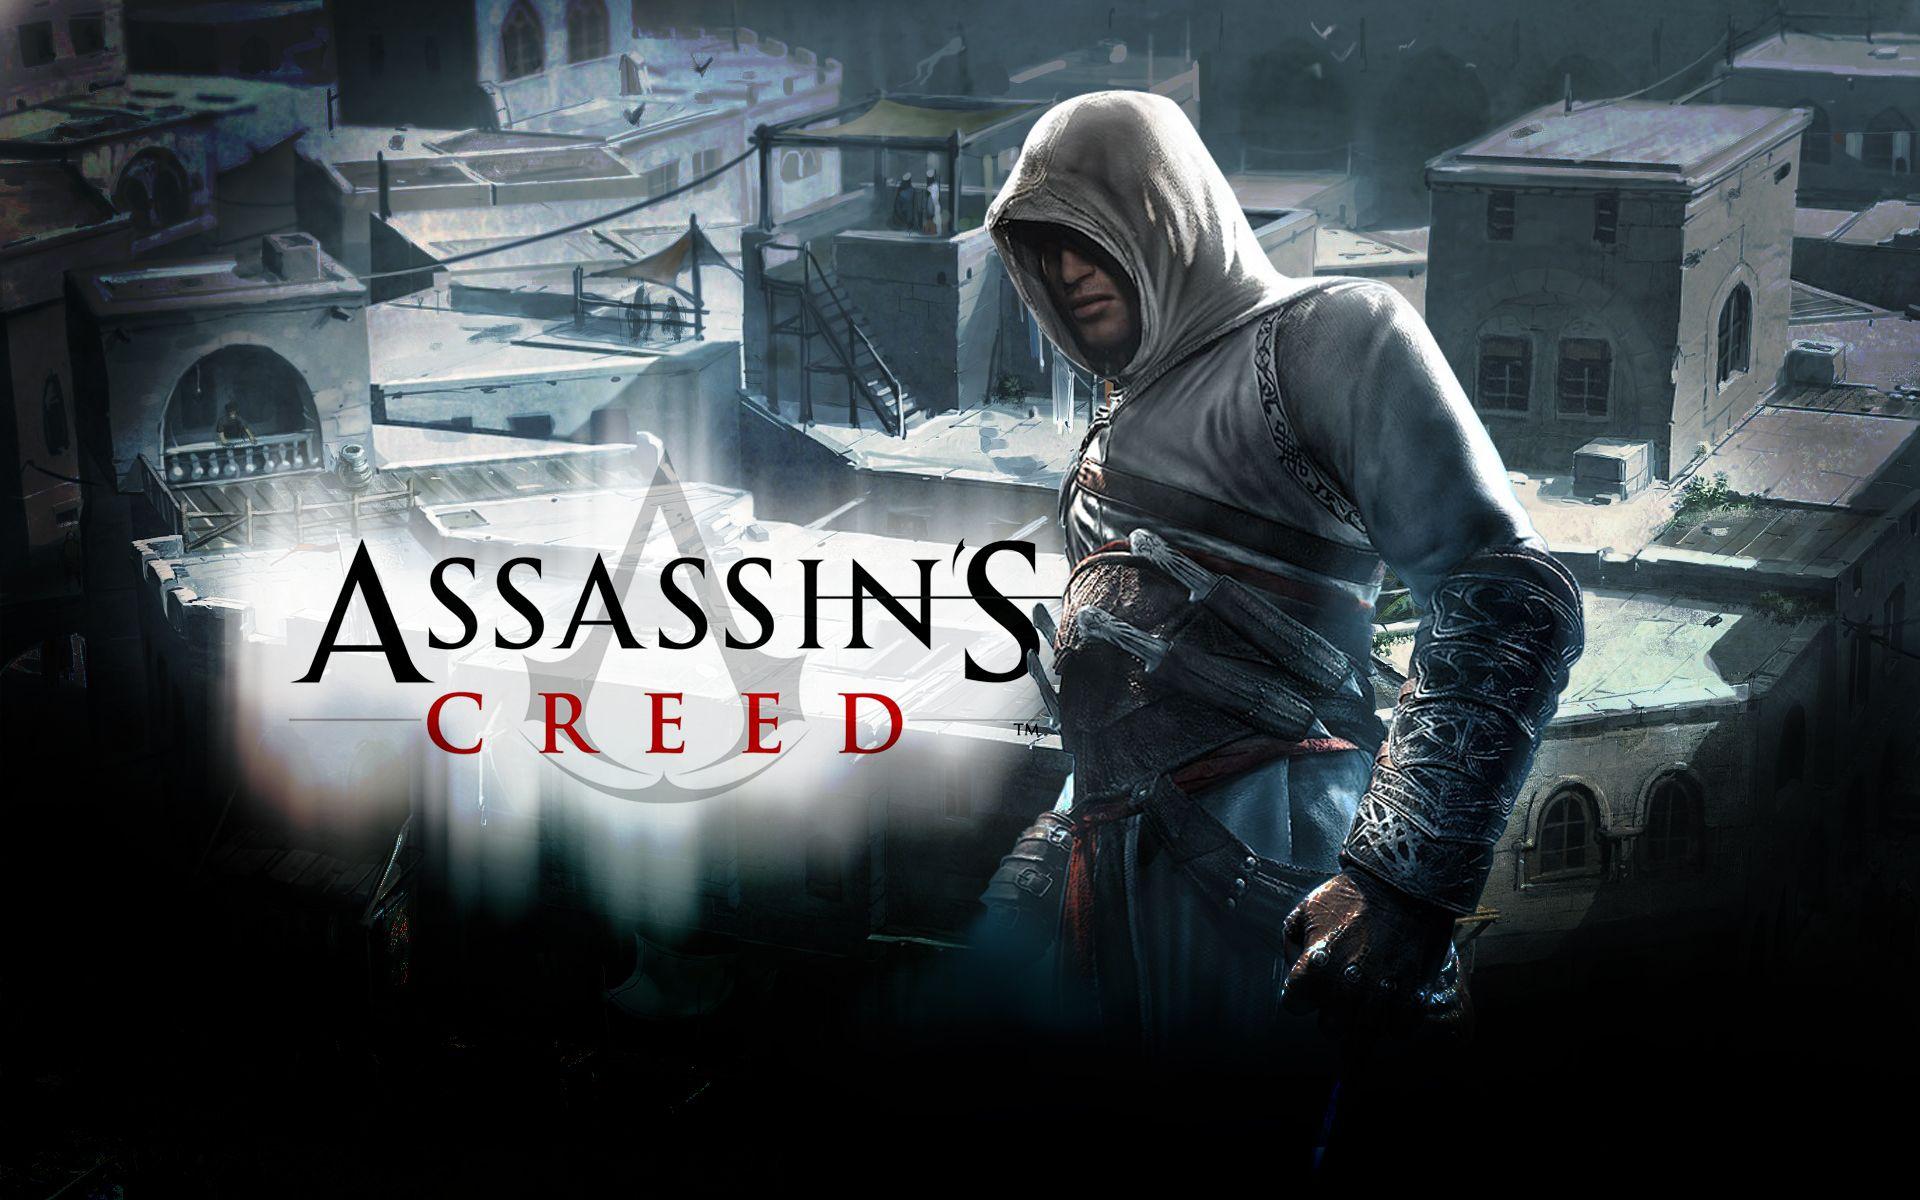 Assassins creed 1 achievements - lanetatrace